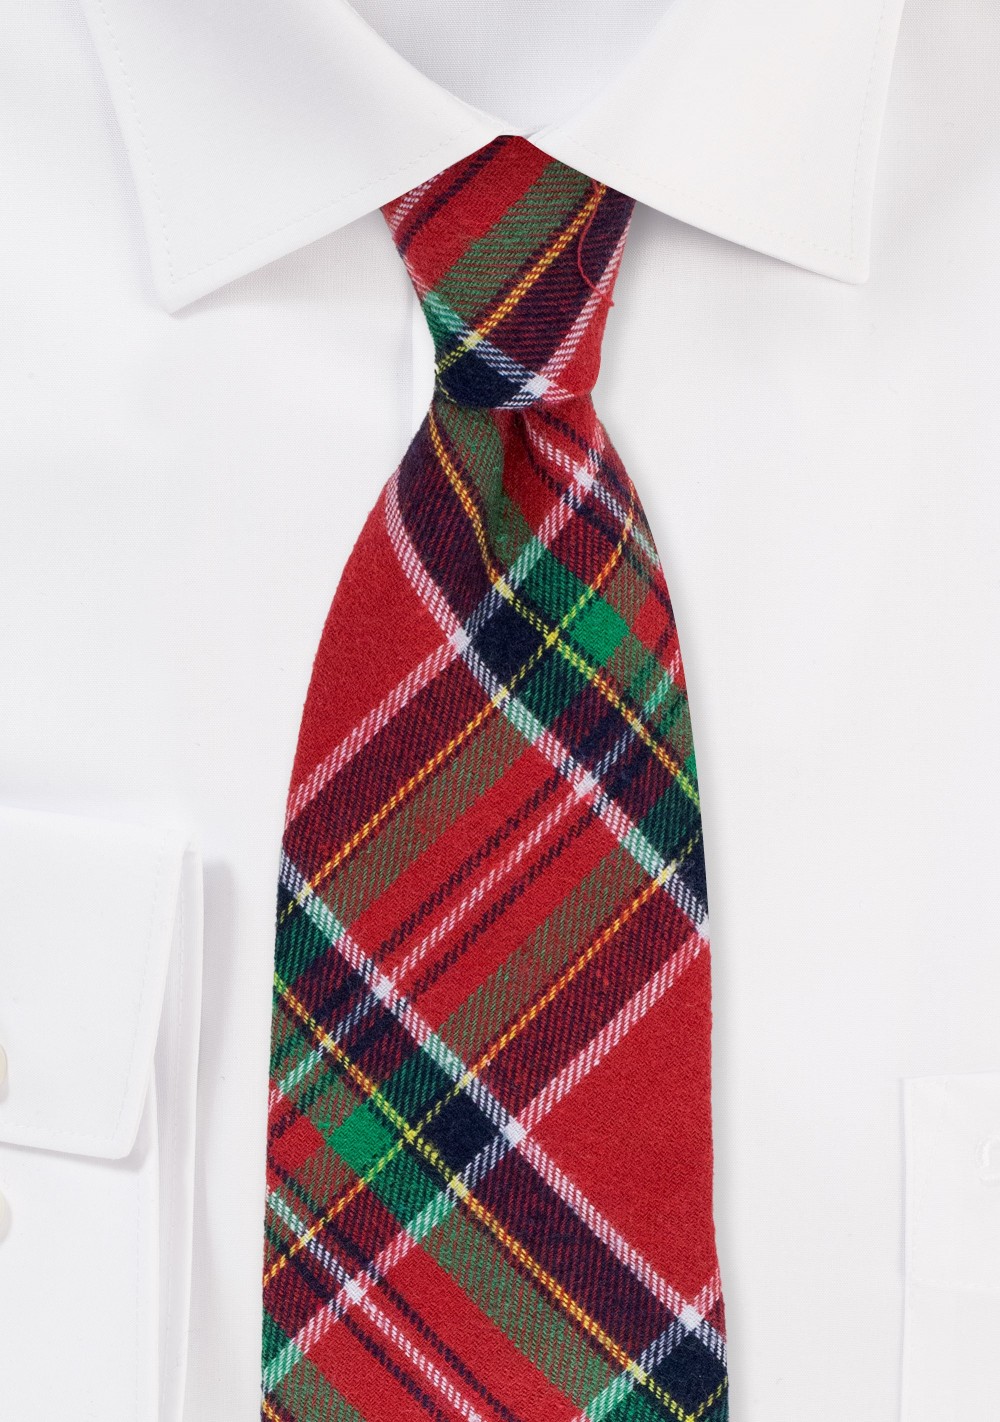 Christmas Plaid Necktie in Cotton